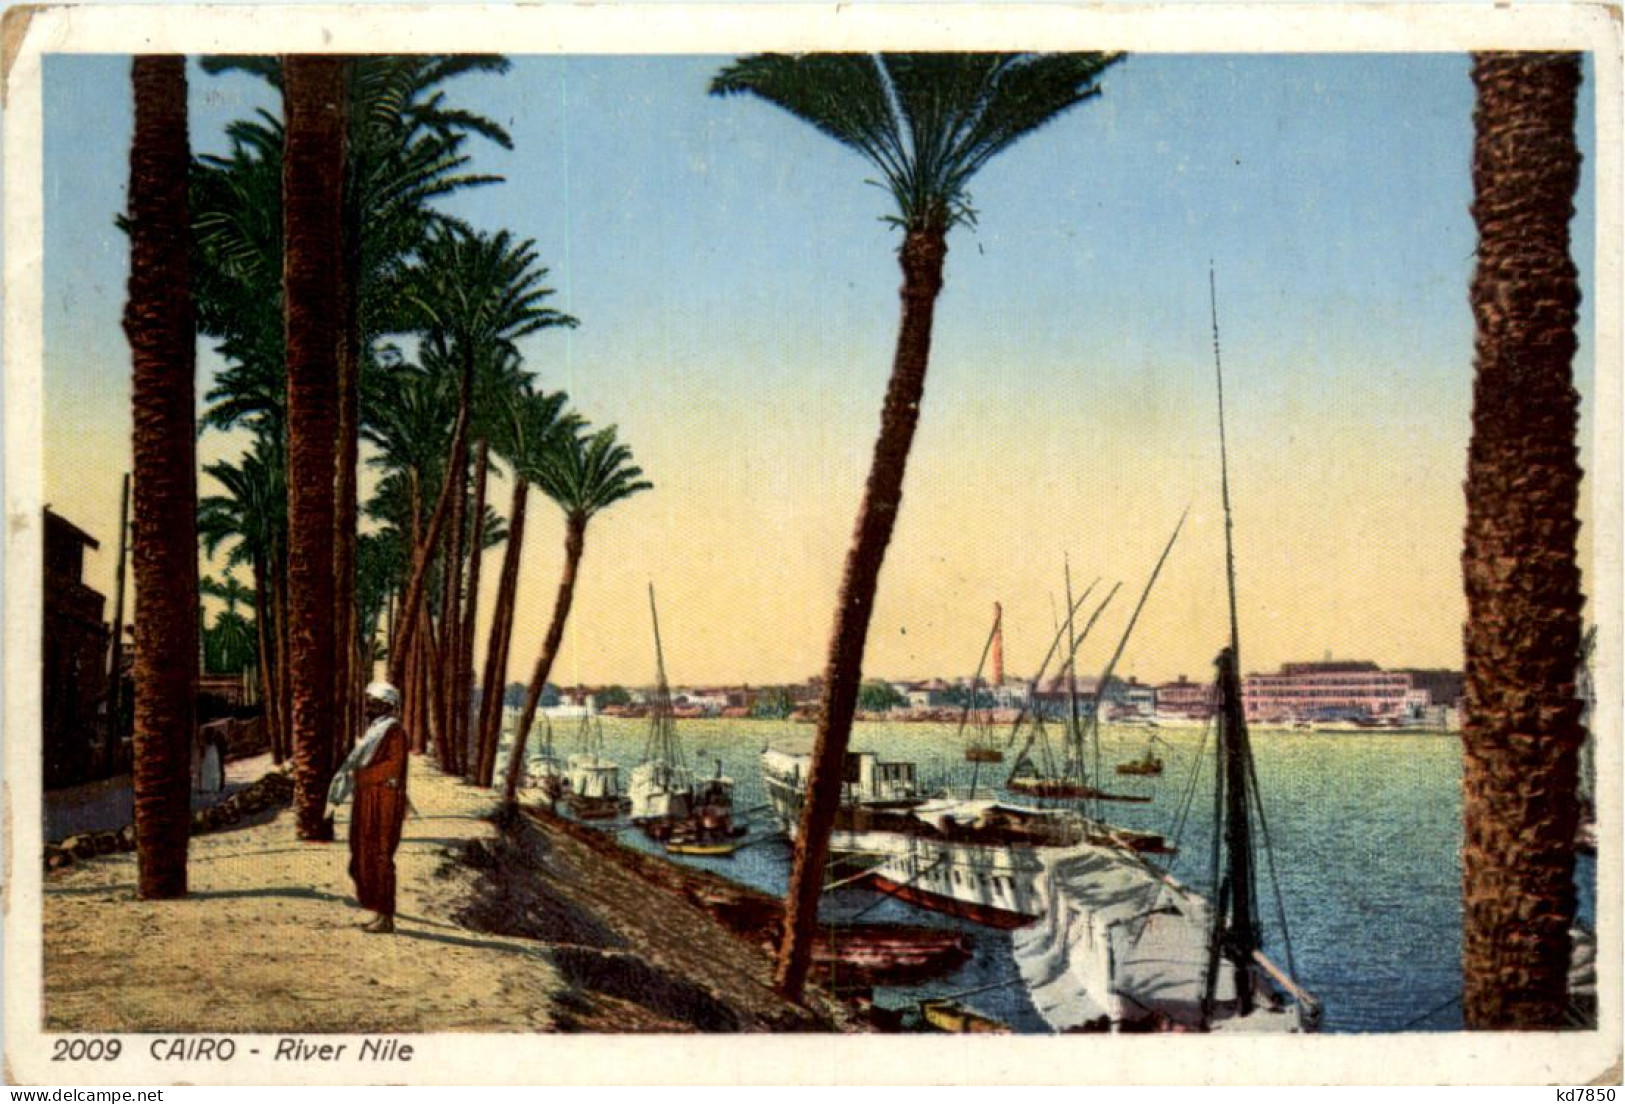 Cairo - River Nile - Le Caire